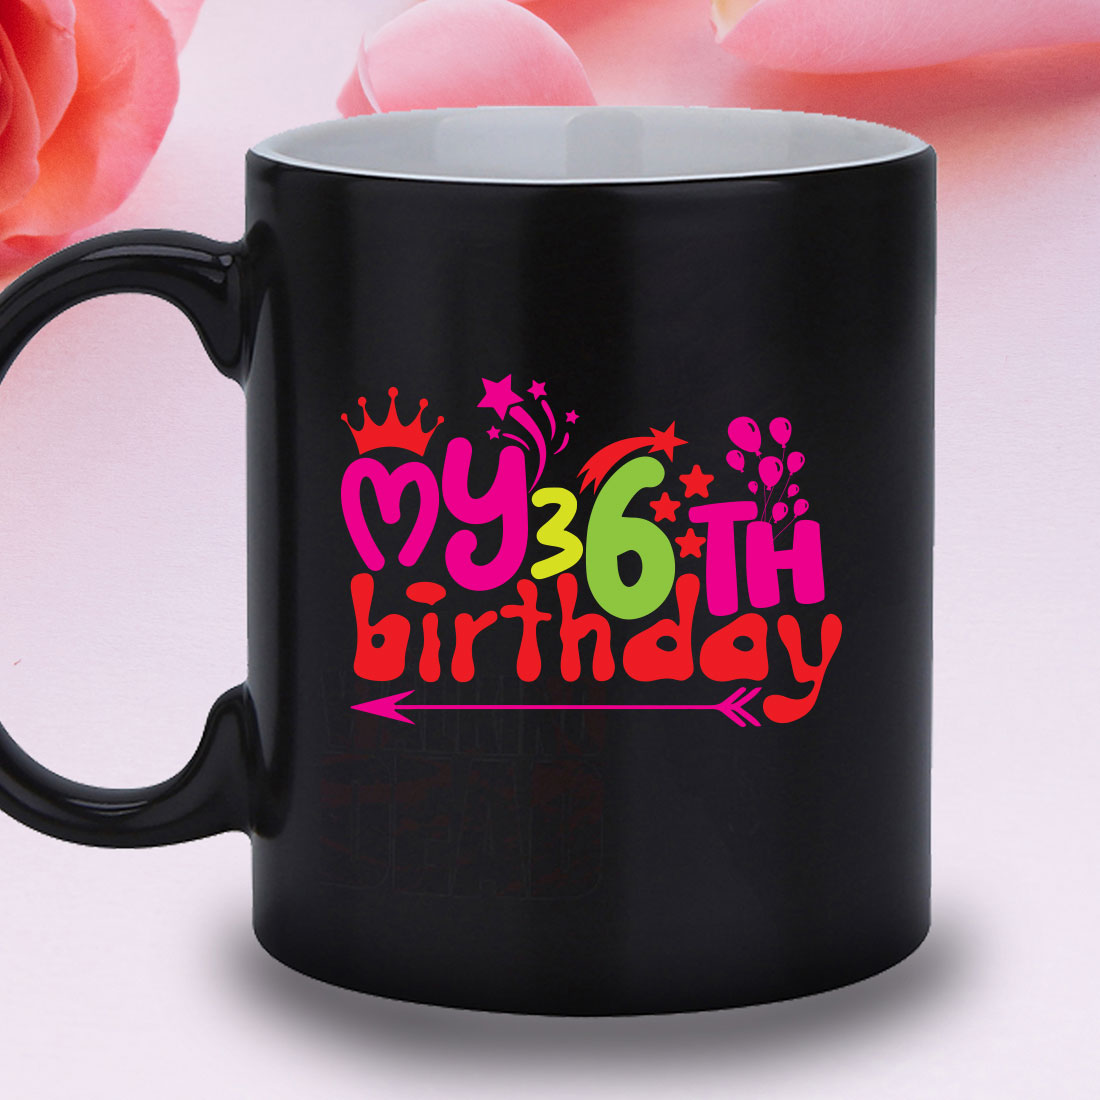 Black coffee mug with a happy birthday message.